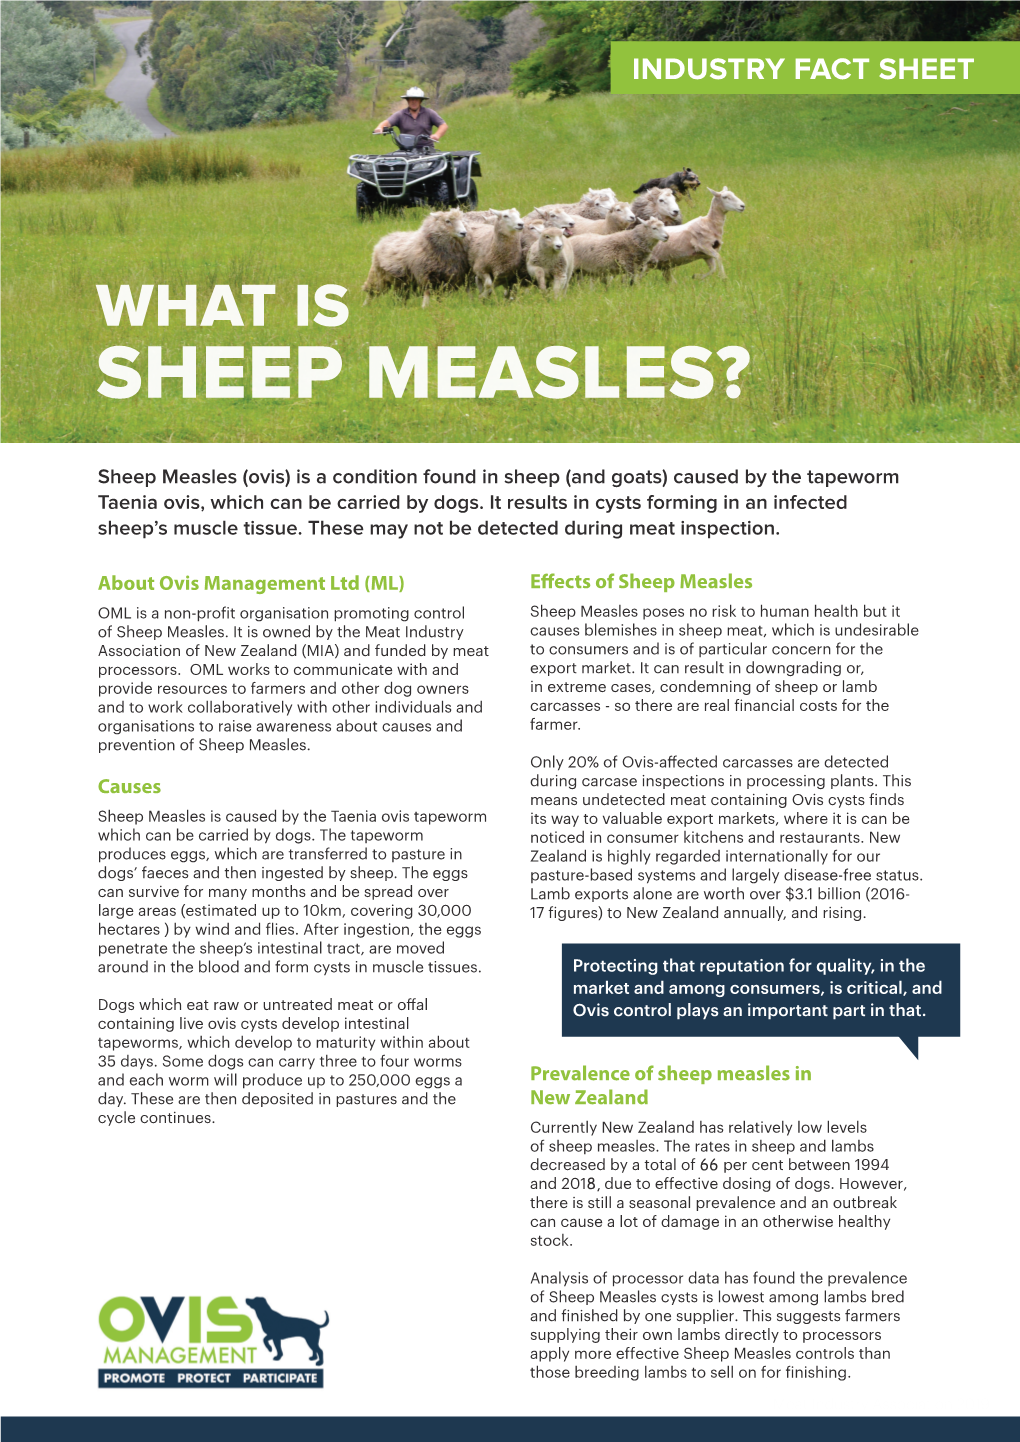 Sheep Measles?